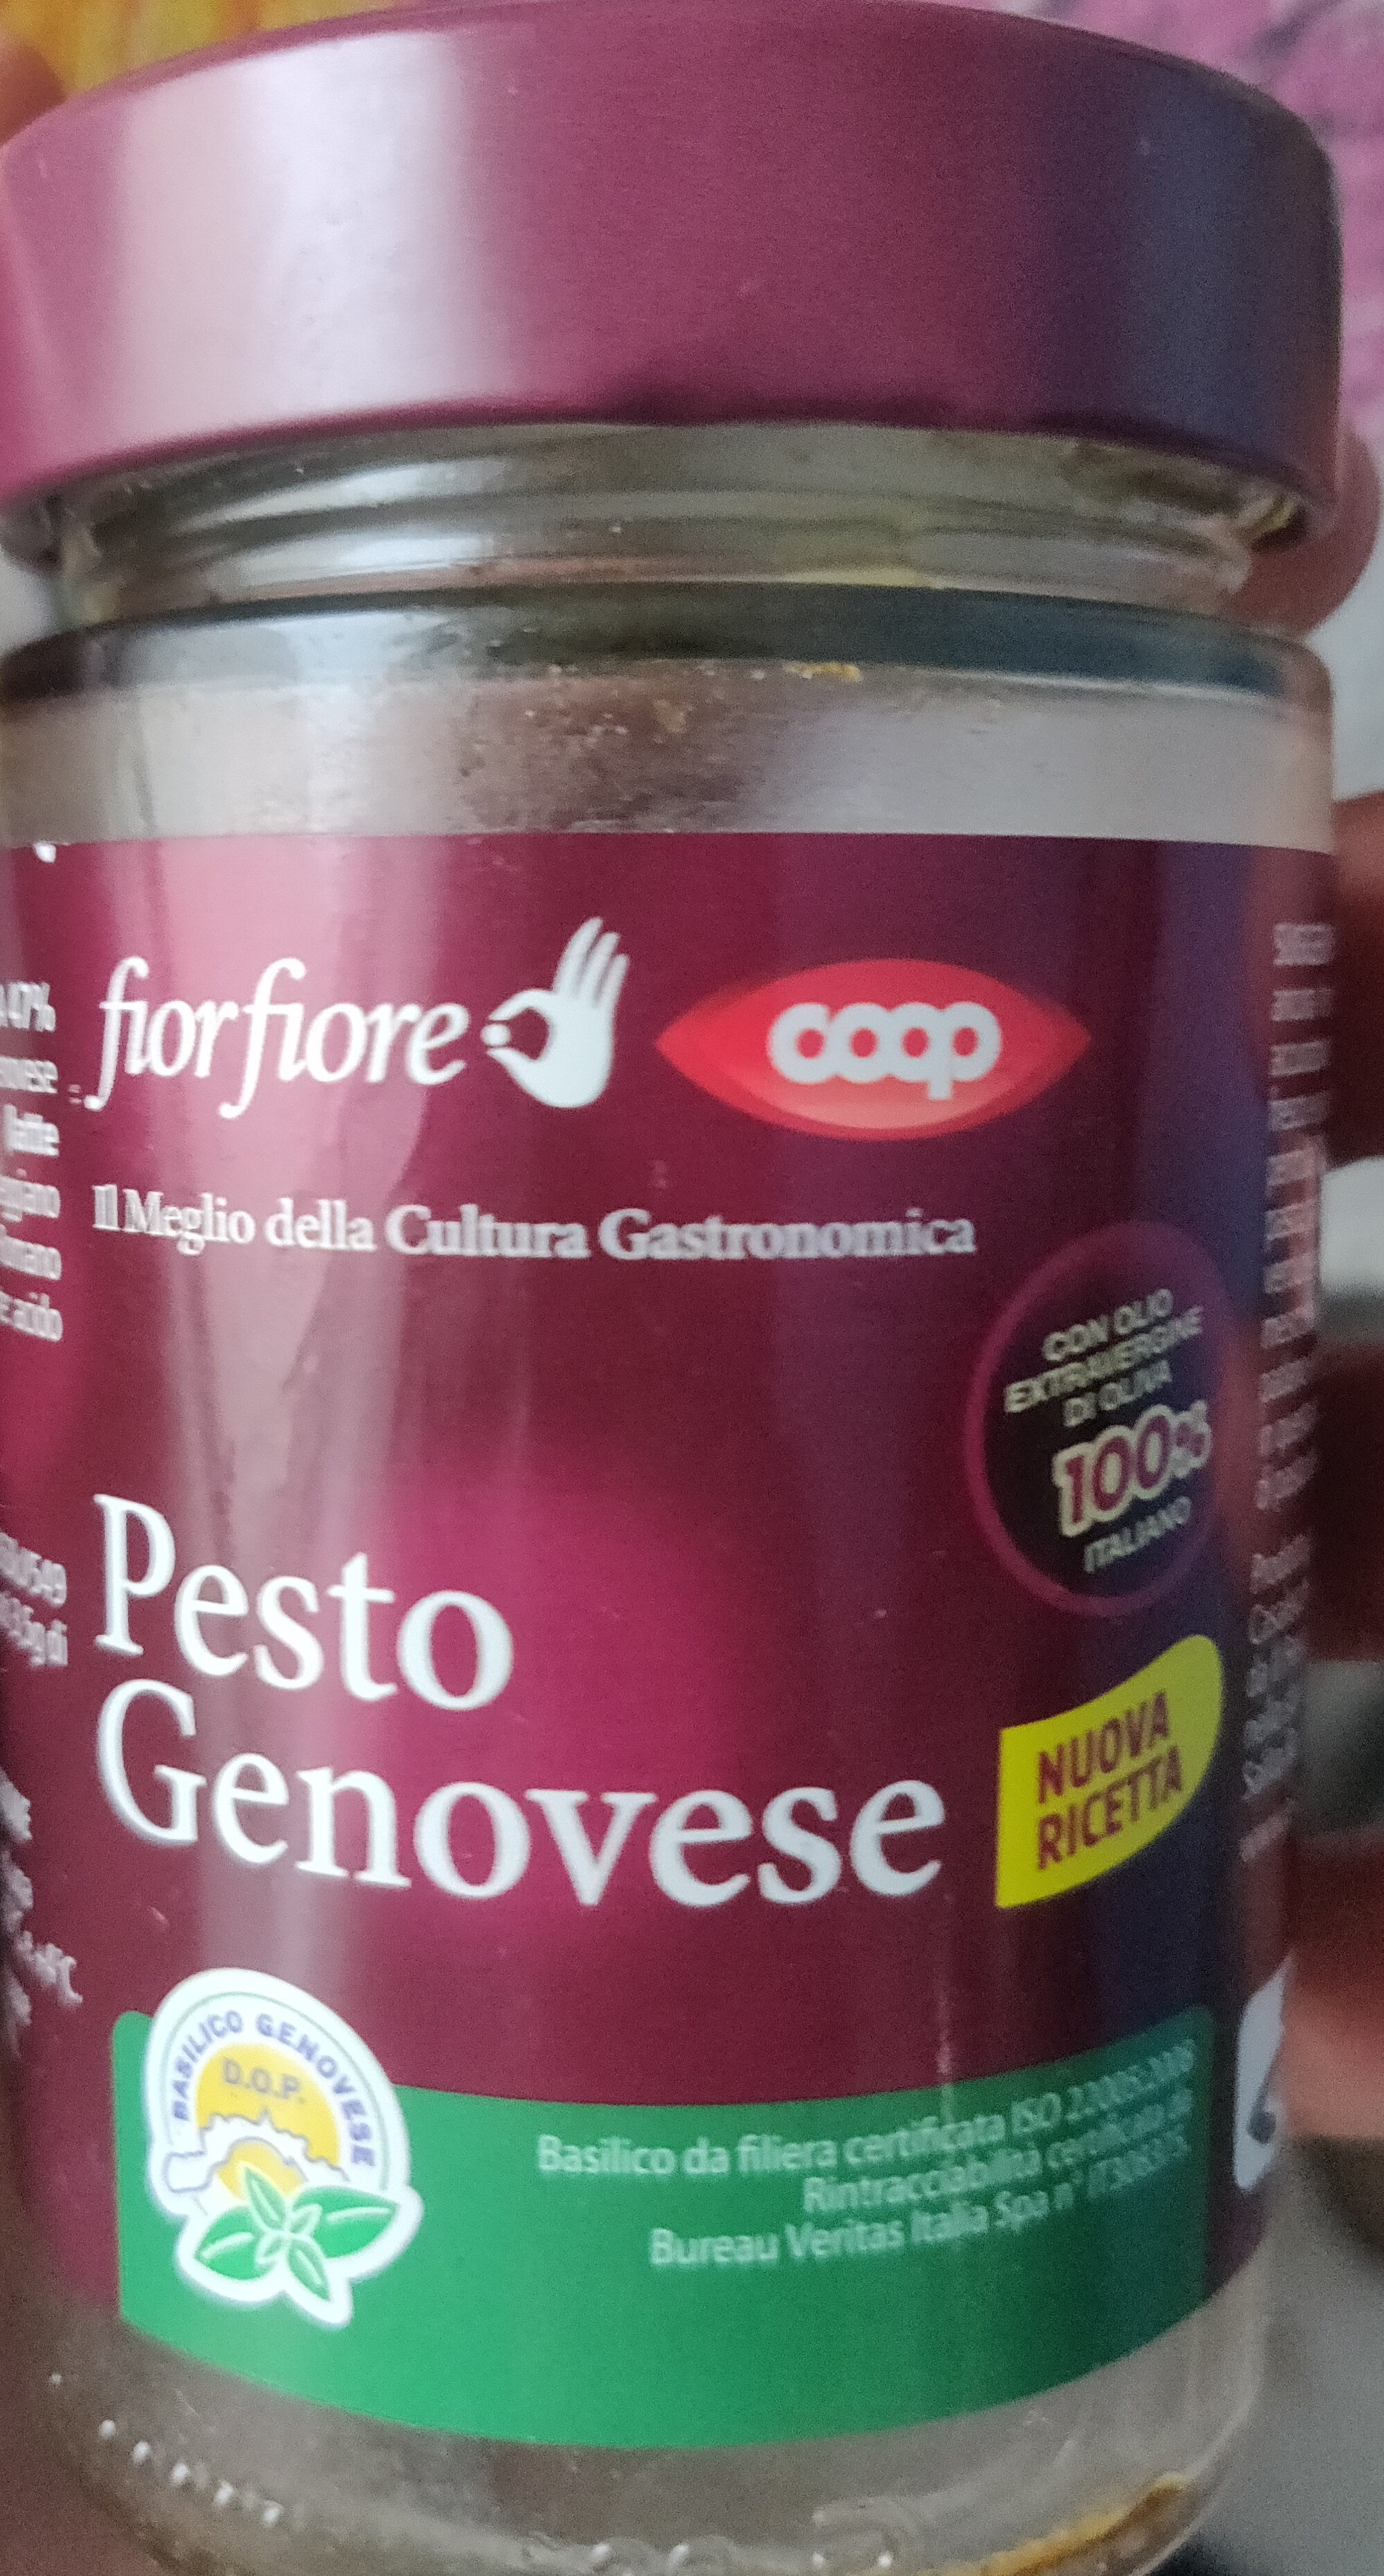 Pesto Genovese fiorfiore - نتاج - it